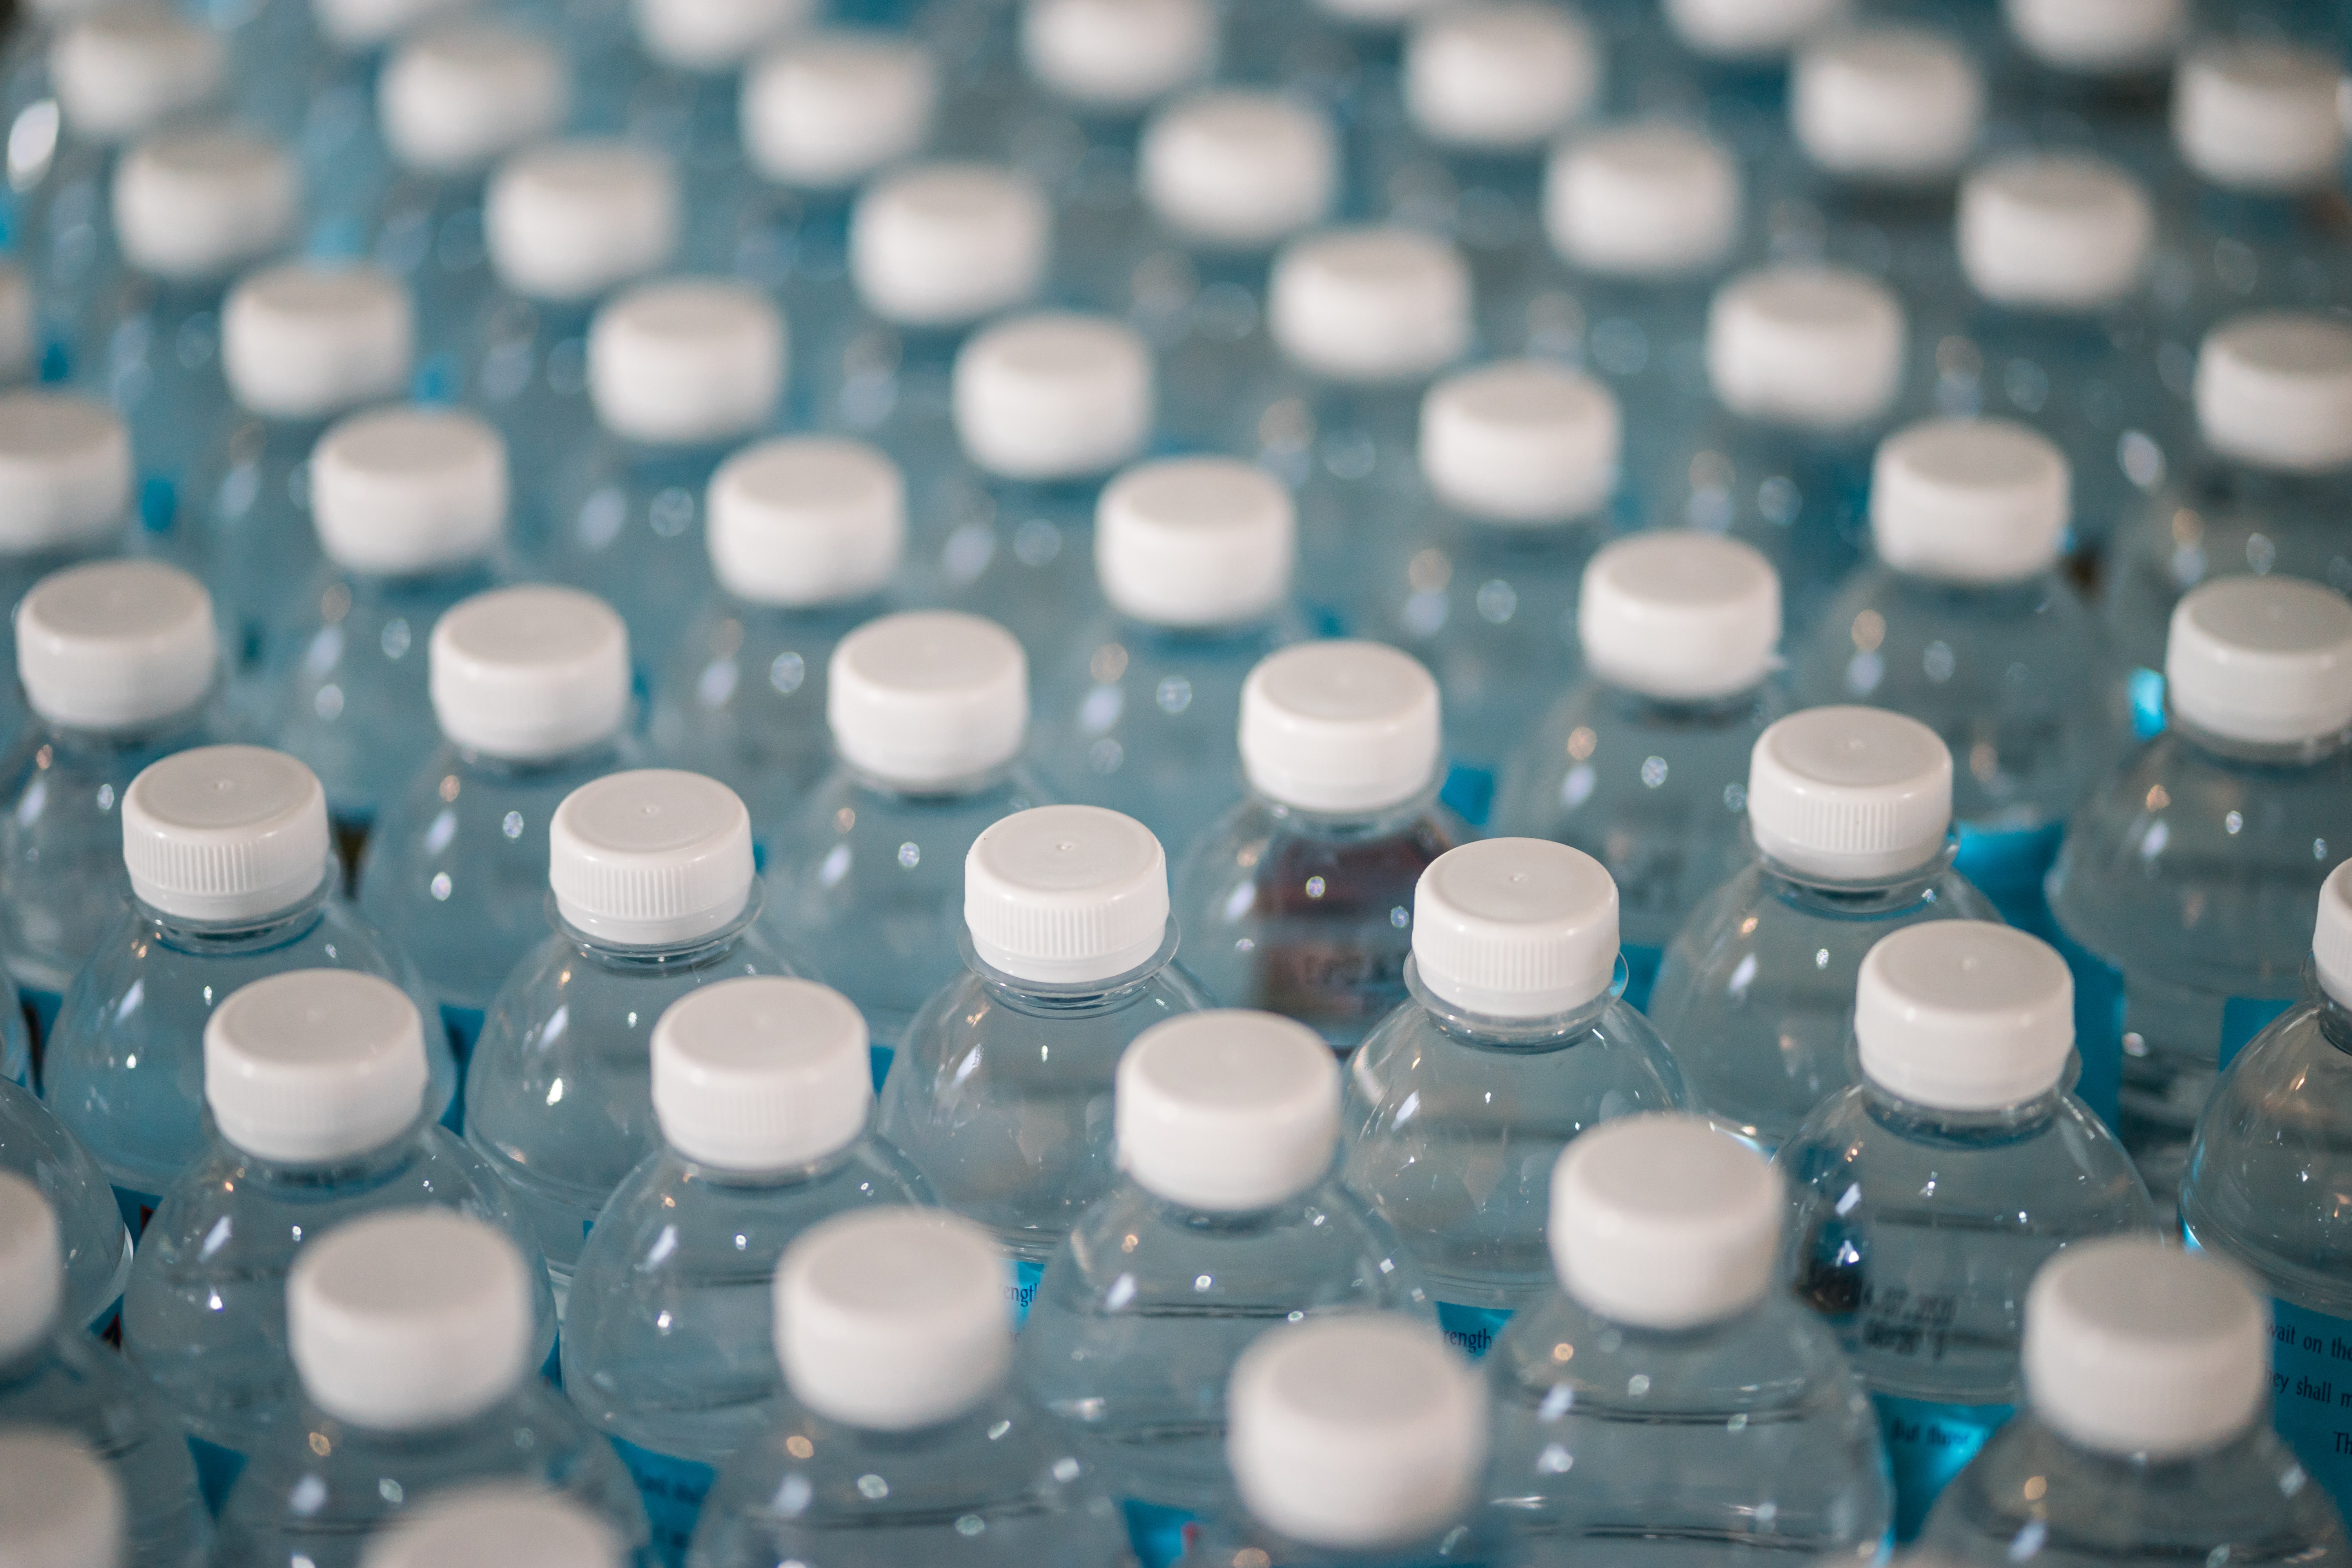 Rows of plastic bottles